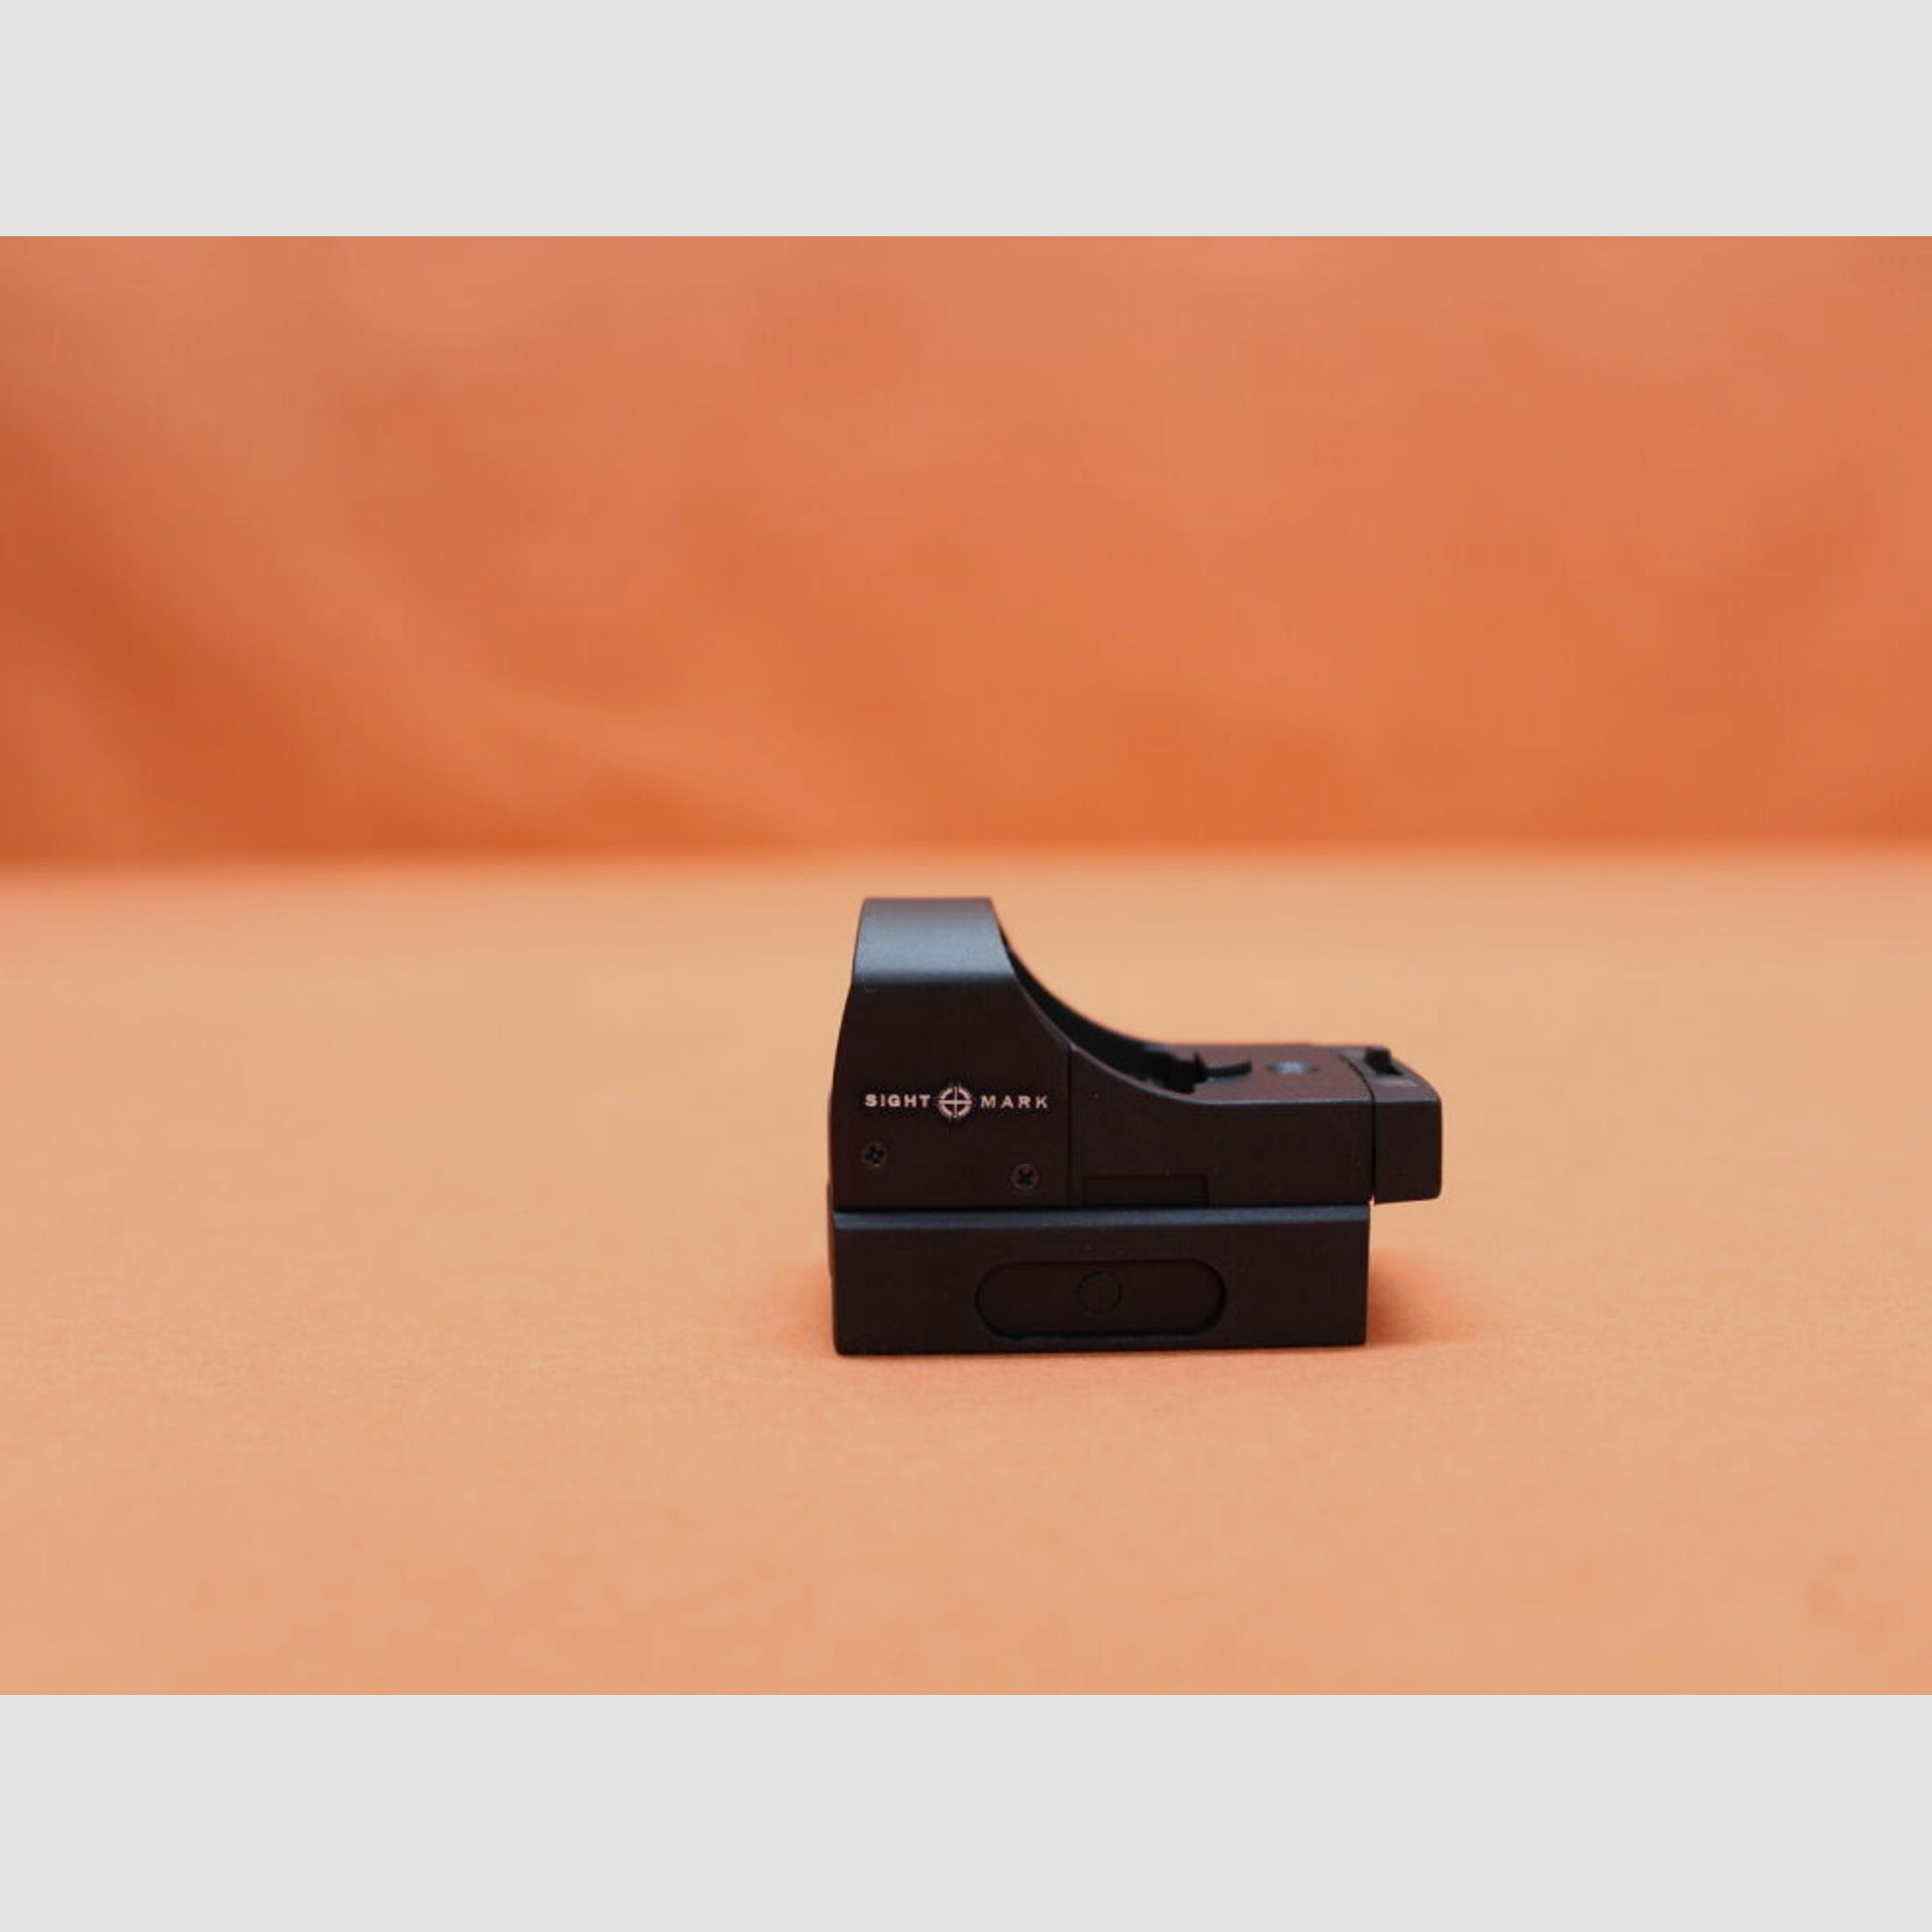 Sightmark	 Sightmark Mini-Shot SM13001 Leuchtpunktvisier: 3MOA Dot Absehen/ 1MOA Skala/ Aluminium Schutzbügel